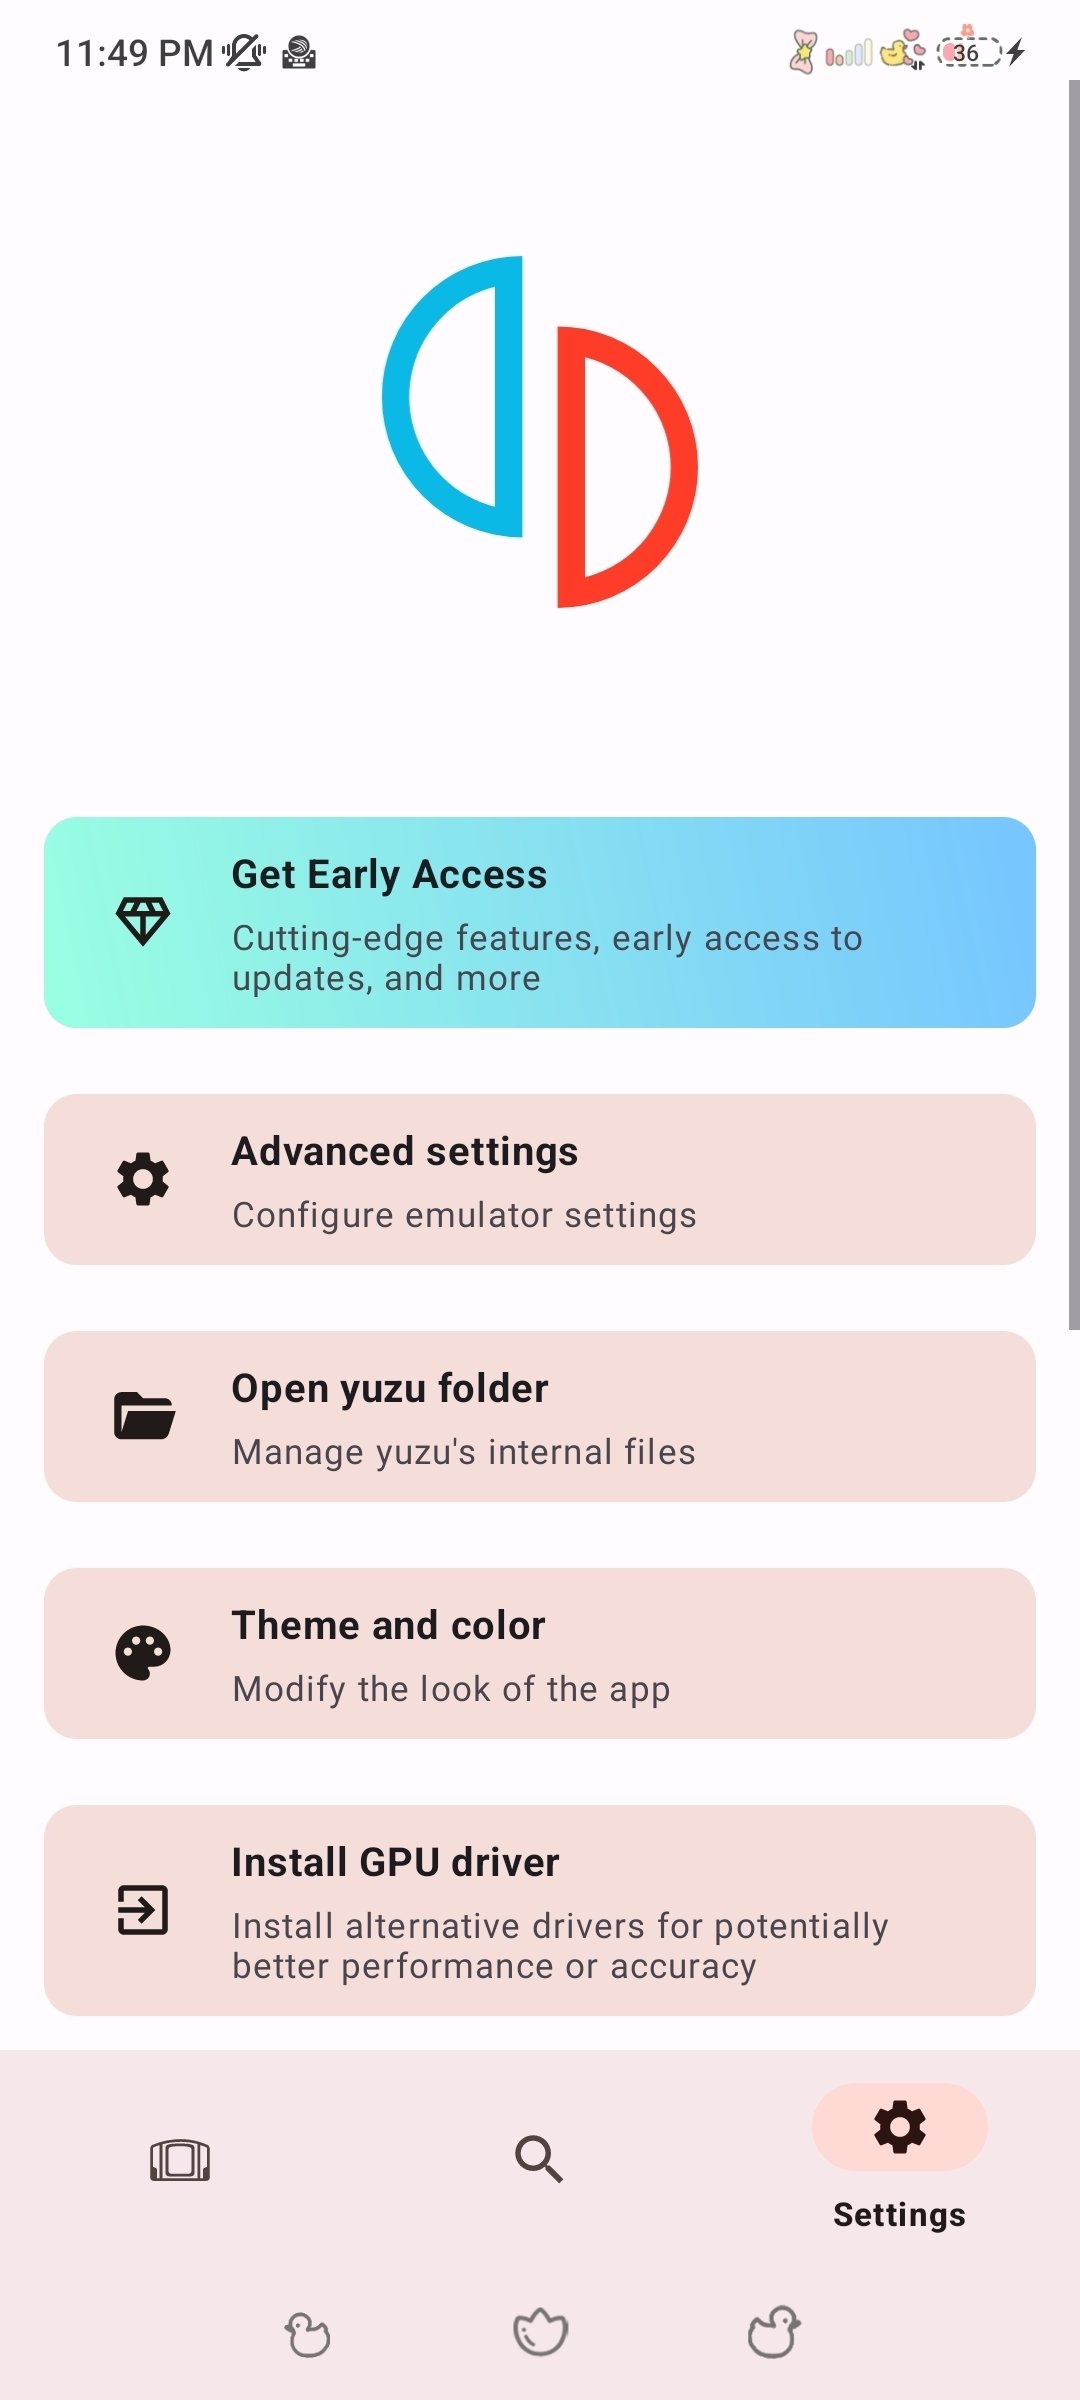 How to Download yuzu Emulator on Mobile